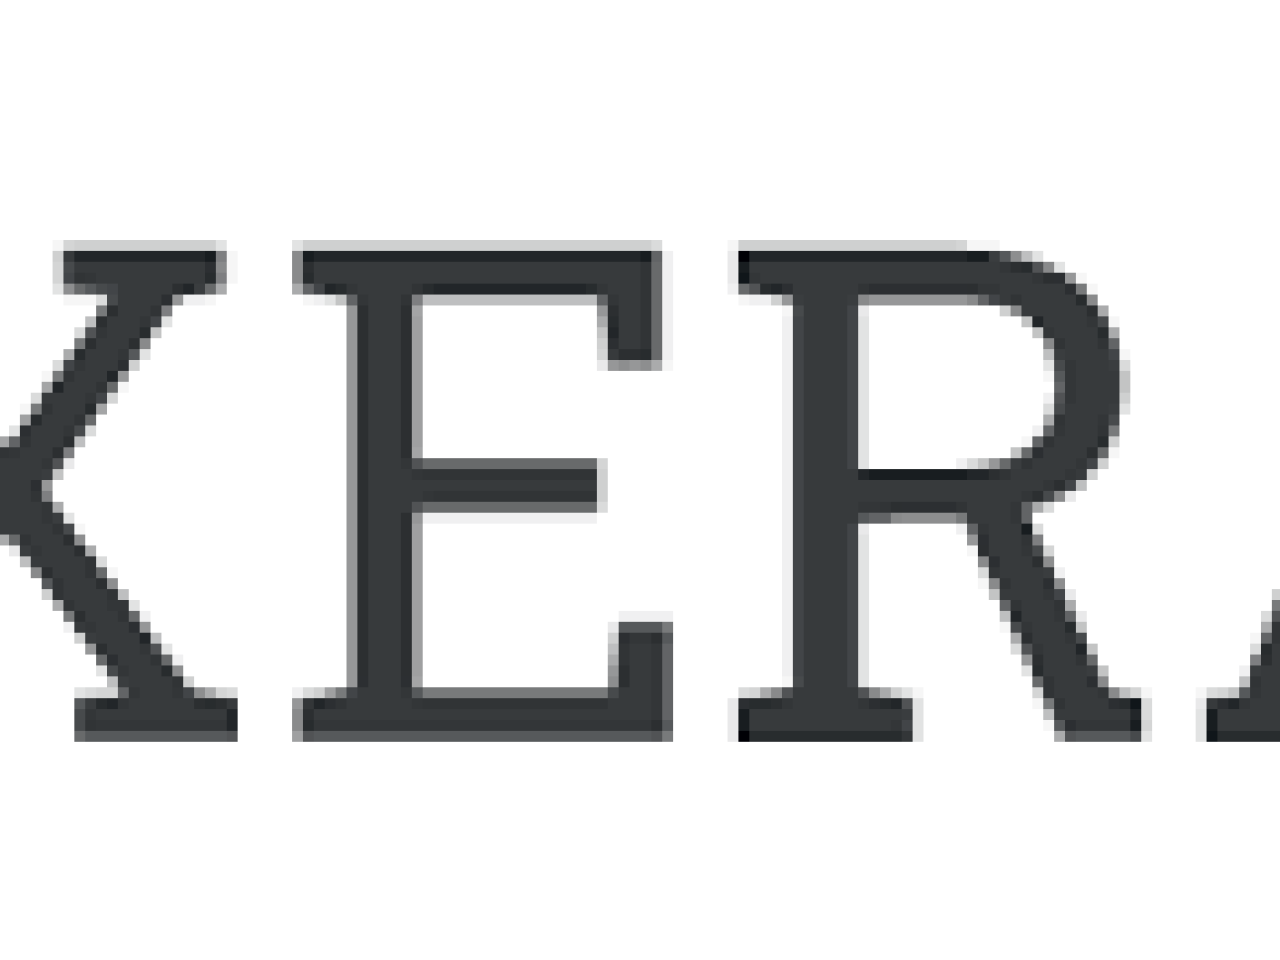 PYXERA Global logo